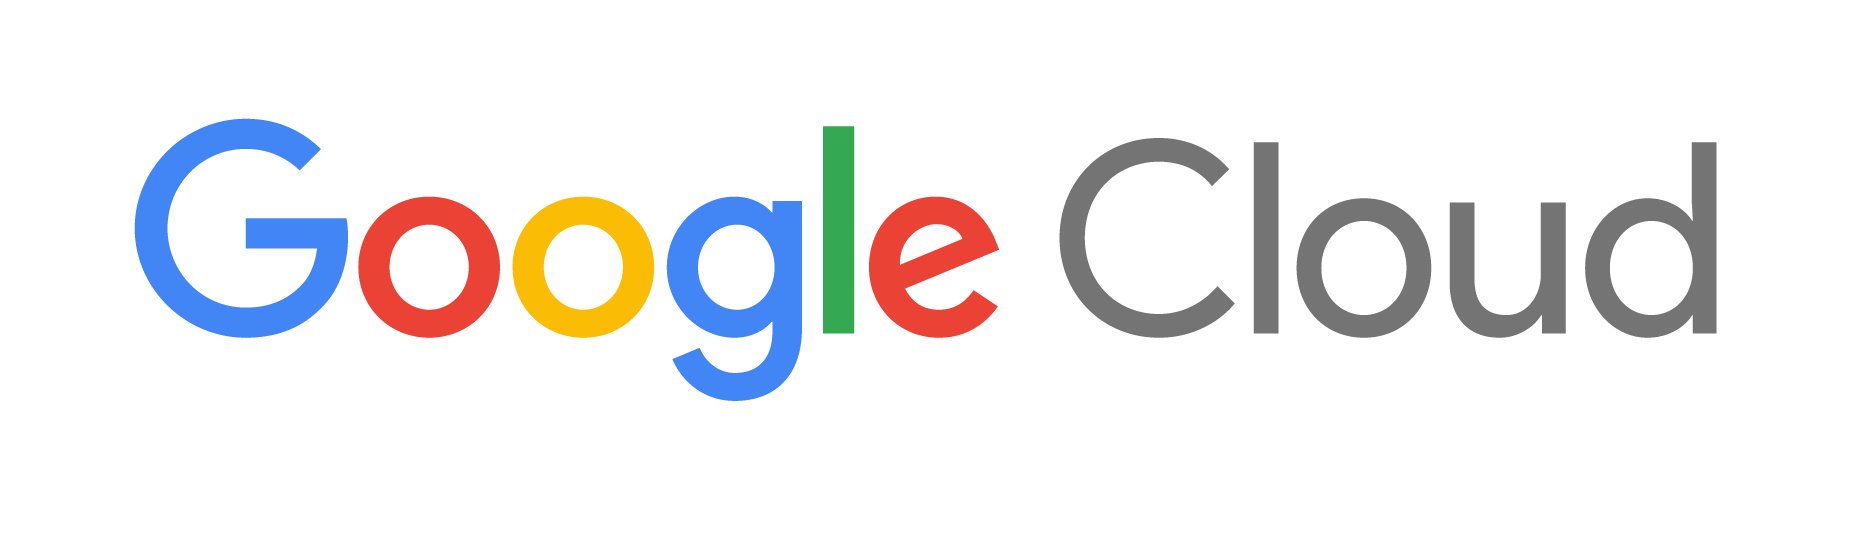 Google-cloud-logo